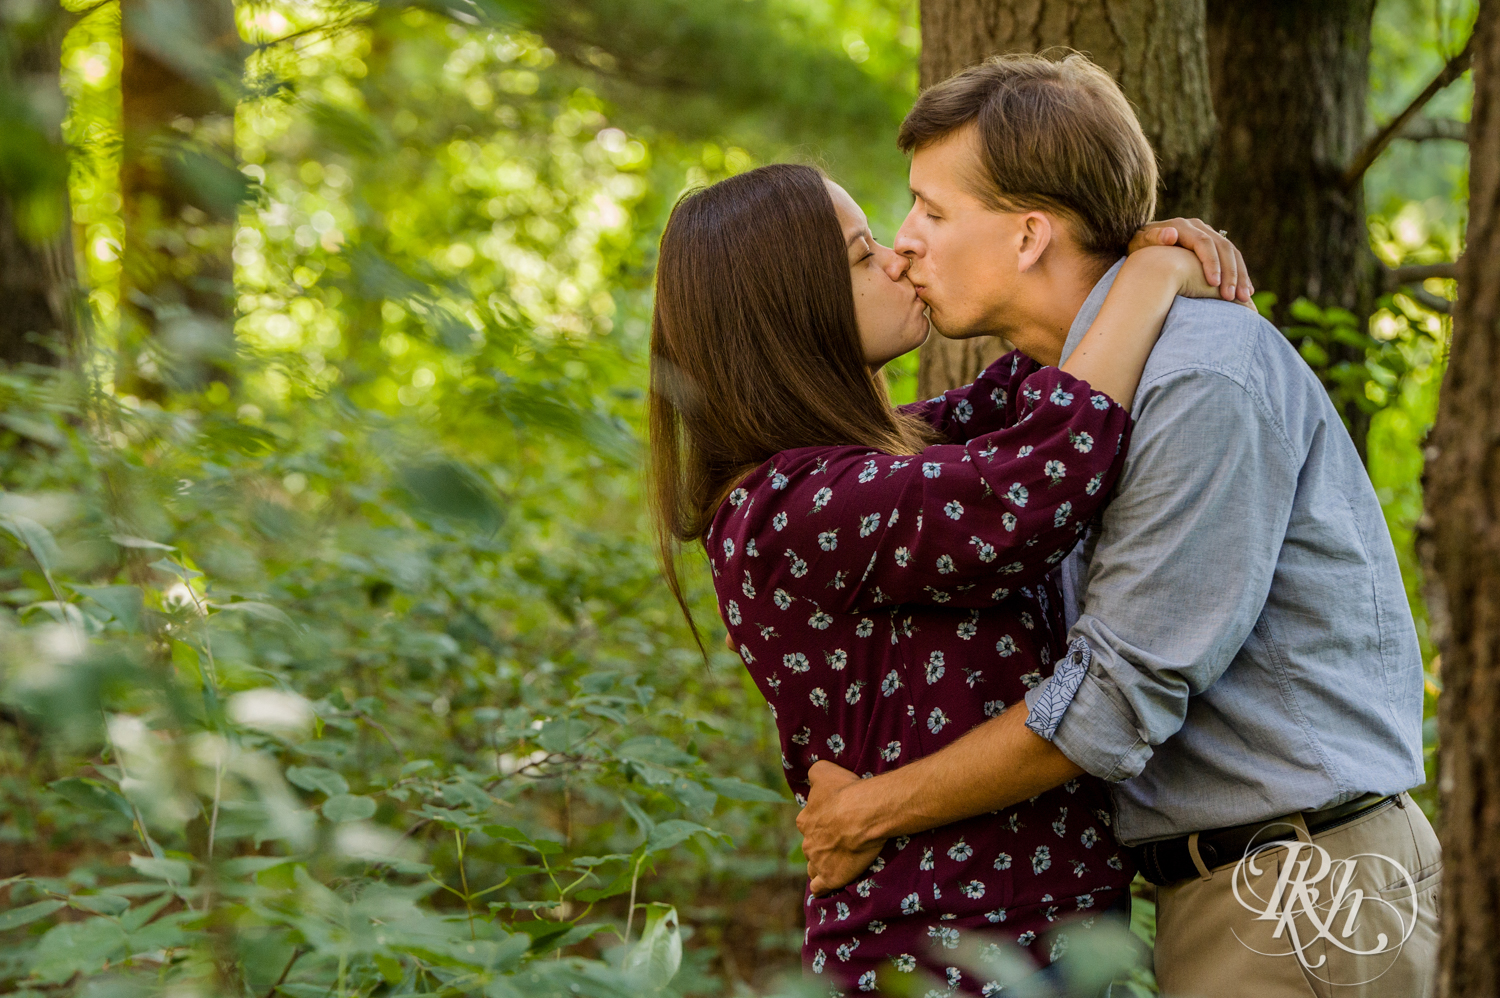 Man in denim and woman in jeans kiss at Lebanon Hills Regional Park in Eagan, Minnesota.